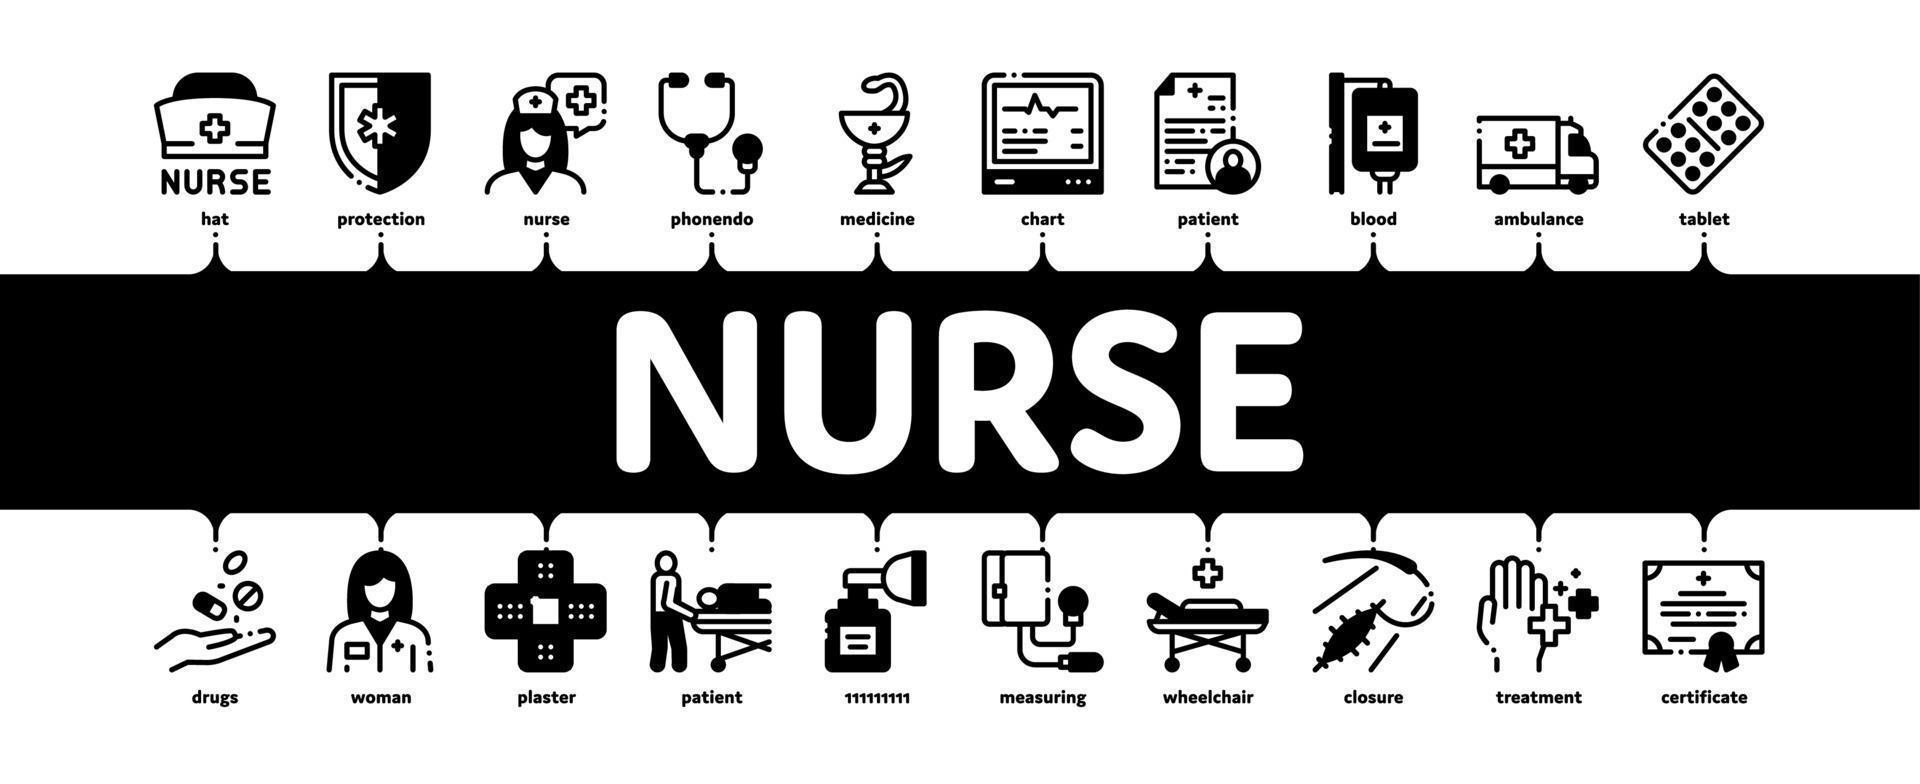 vetor de banner infográfico mínimo de ajuda médica de enfermeira